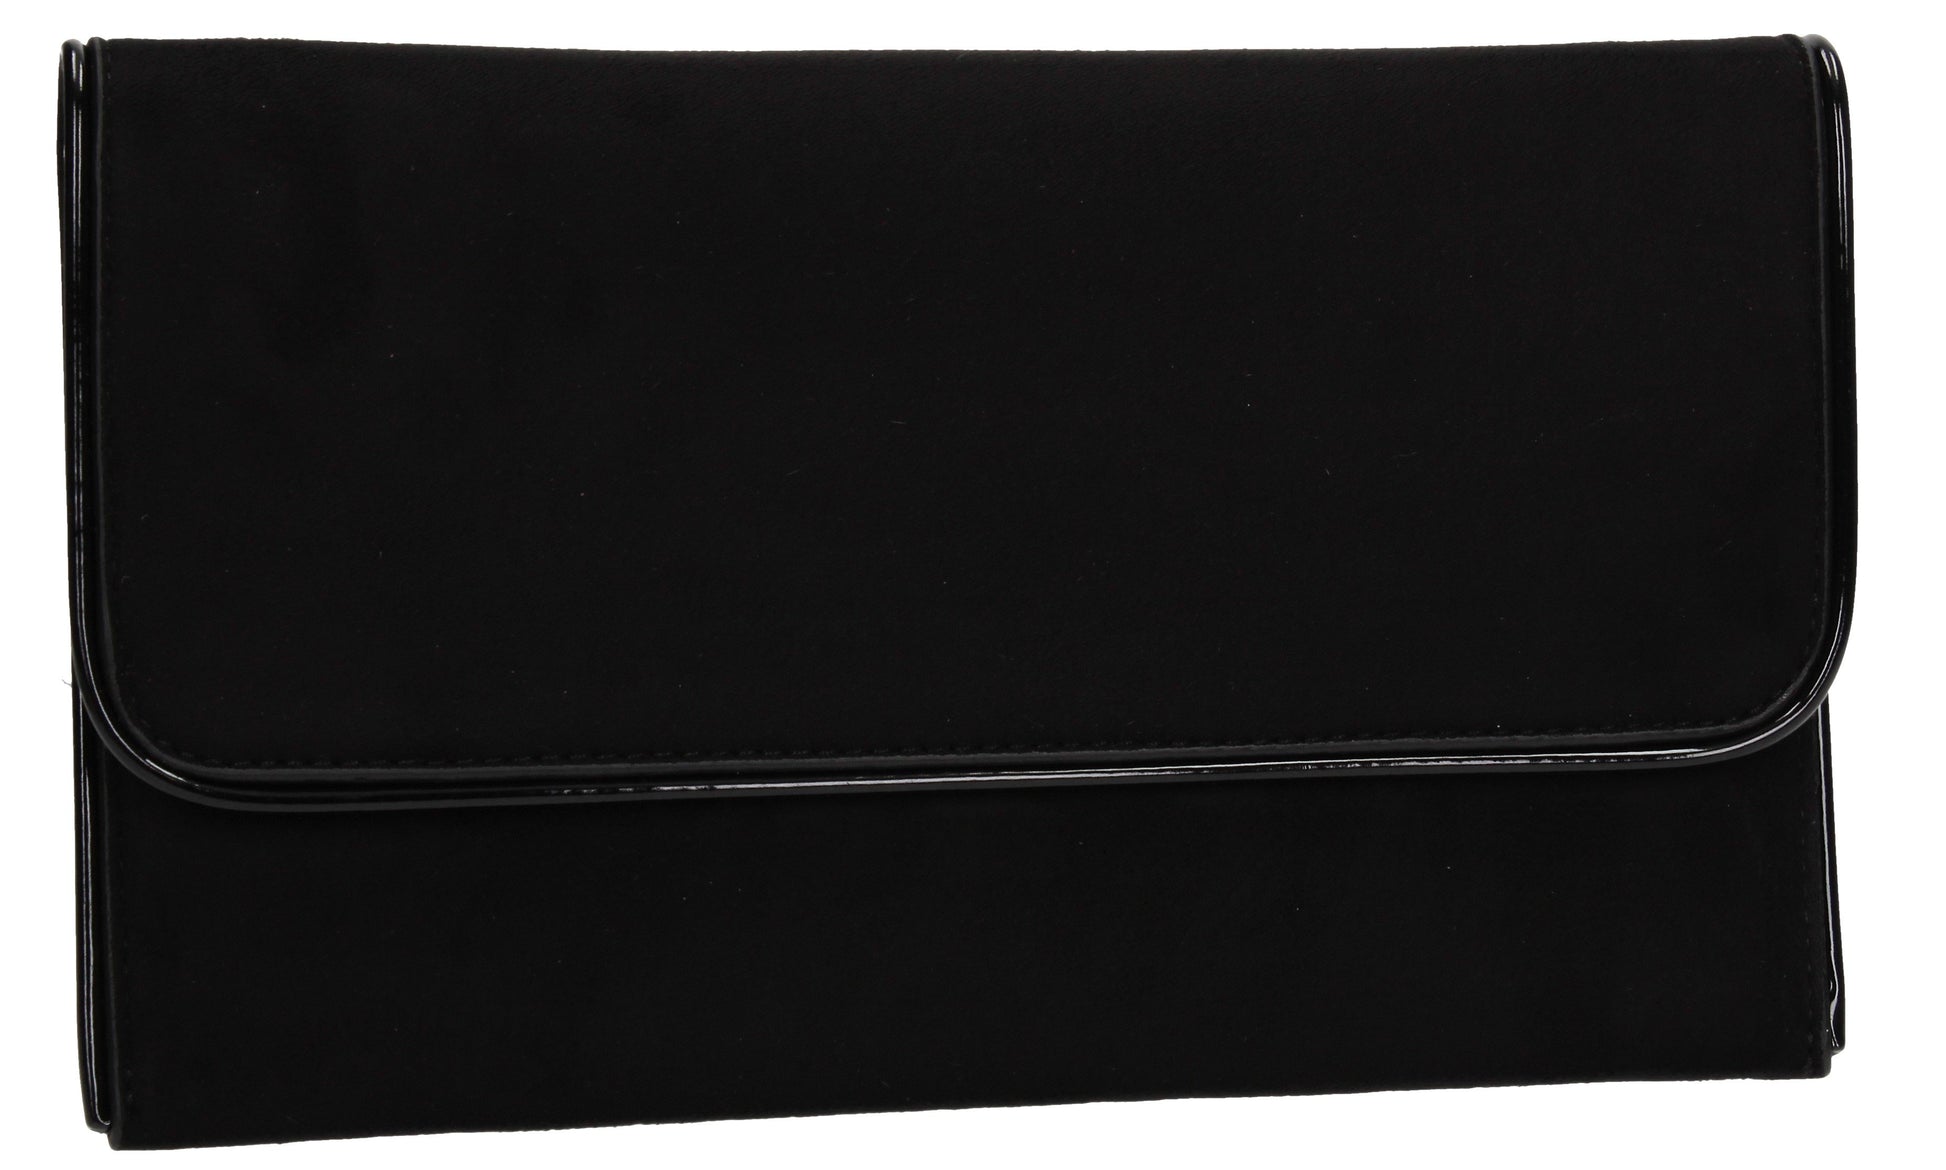 SWANKYSWANS Kora Clutch Bag Black Cute Cheap Clutch Bag For Weddings School and Work